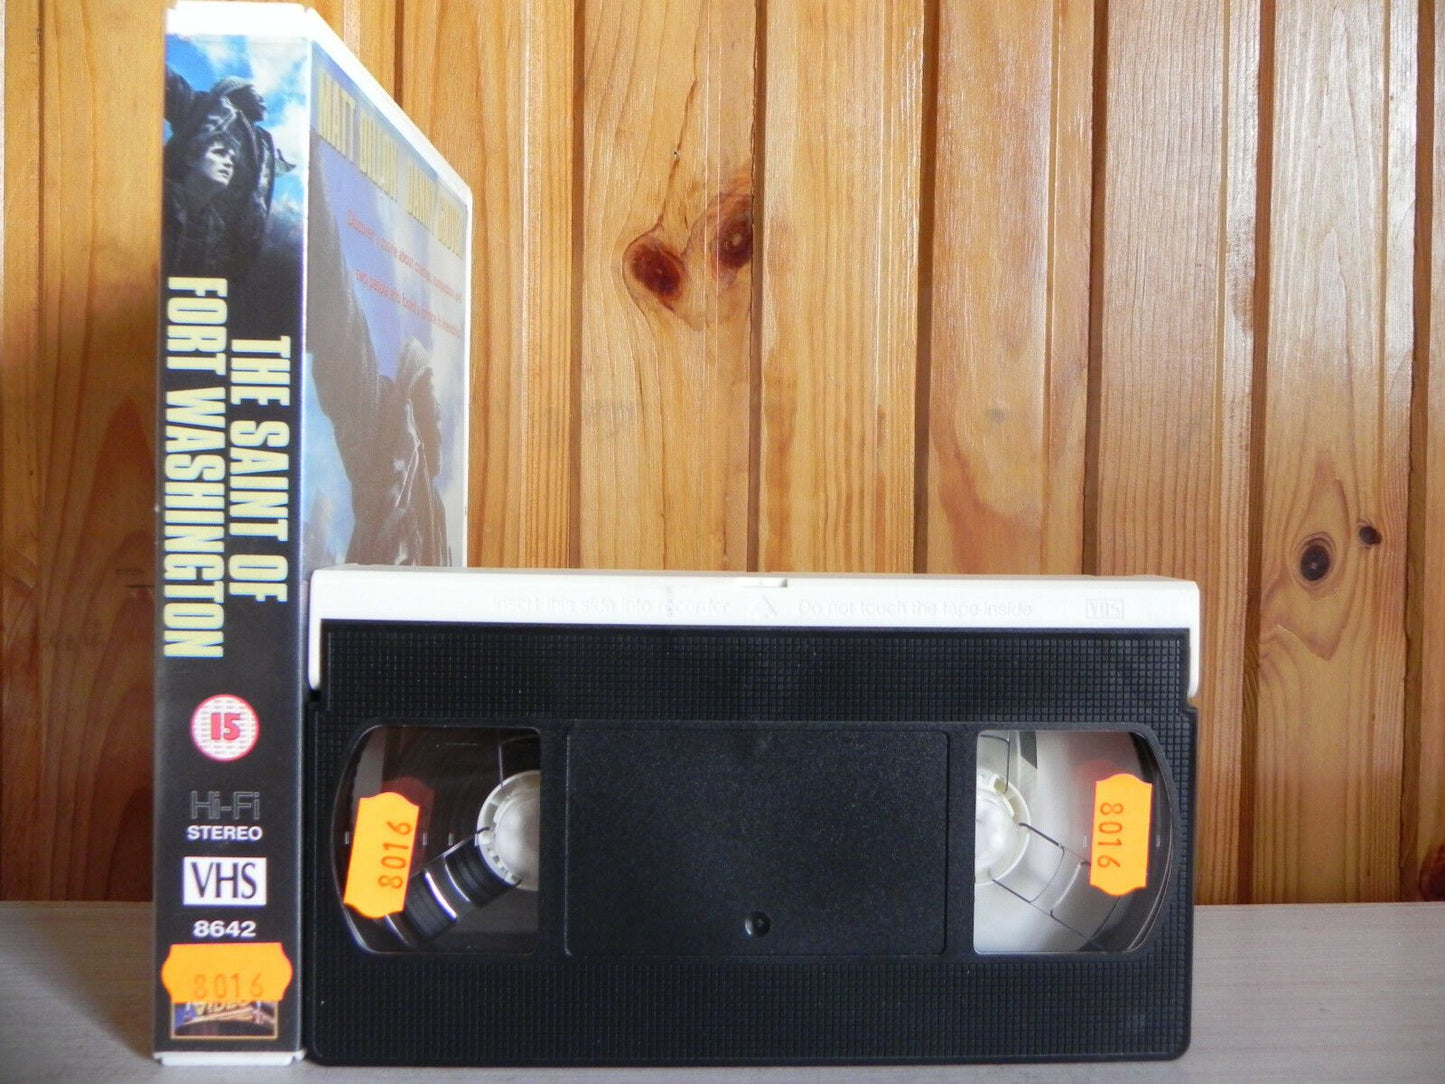 The Saint Of Fort Washington - Fox Video - Drama - Matt Dillon - Large Box - VHS-